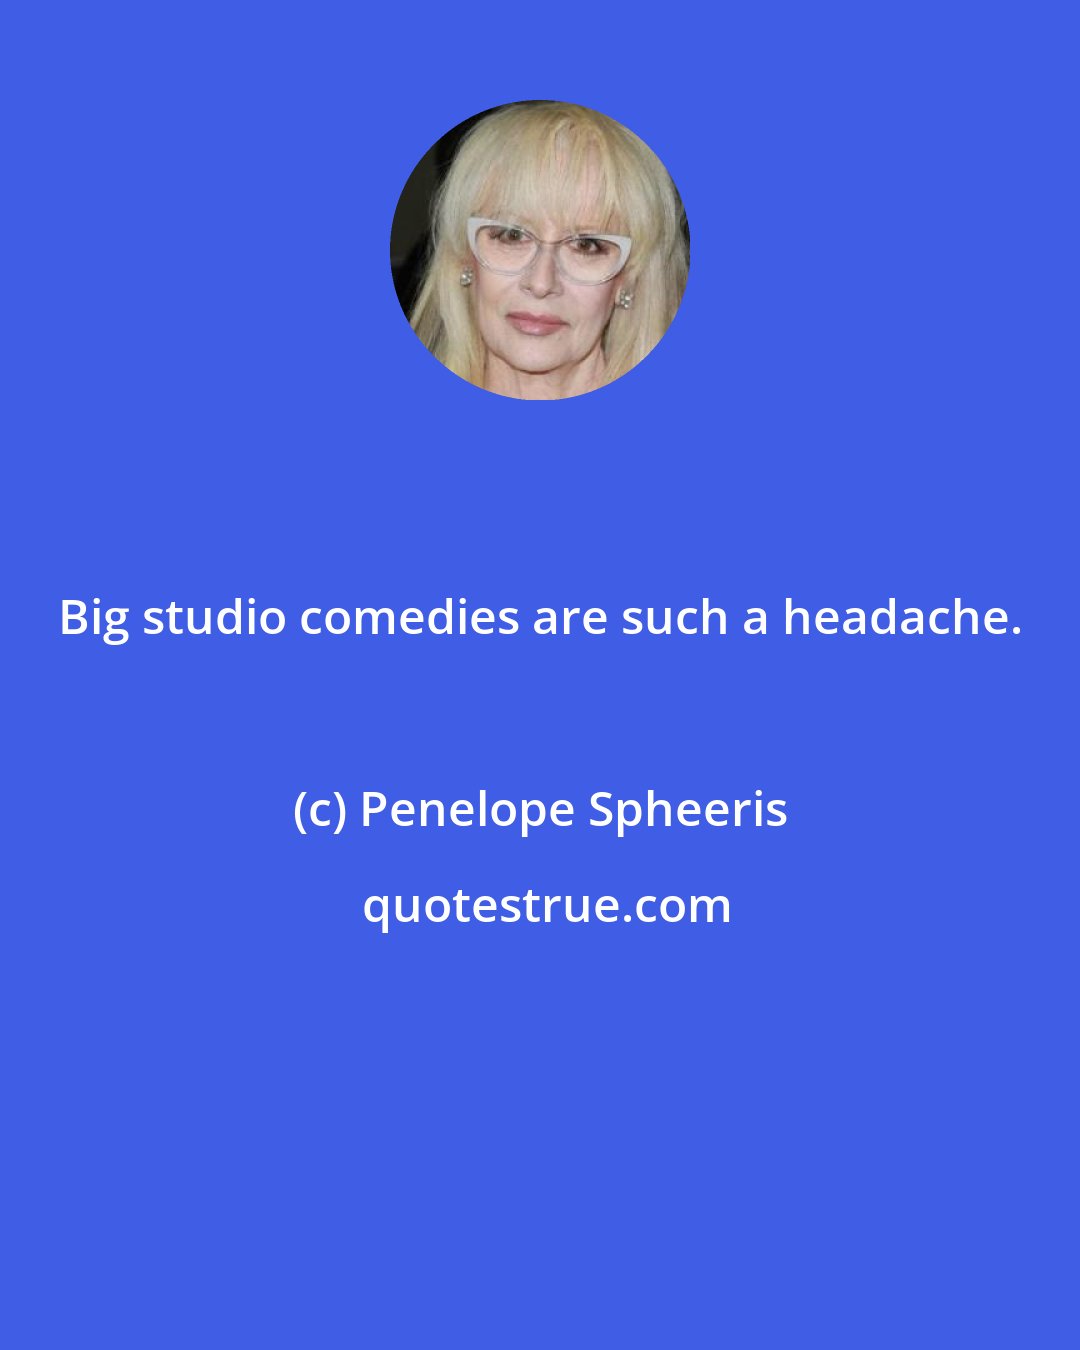 Penelope Spheeris: Big studio comedies are such a headache.